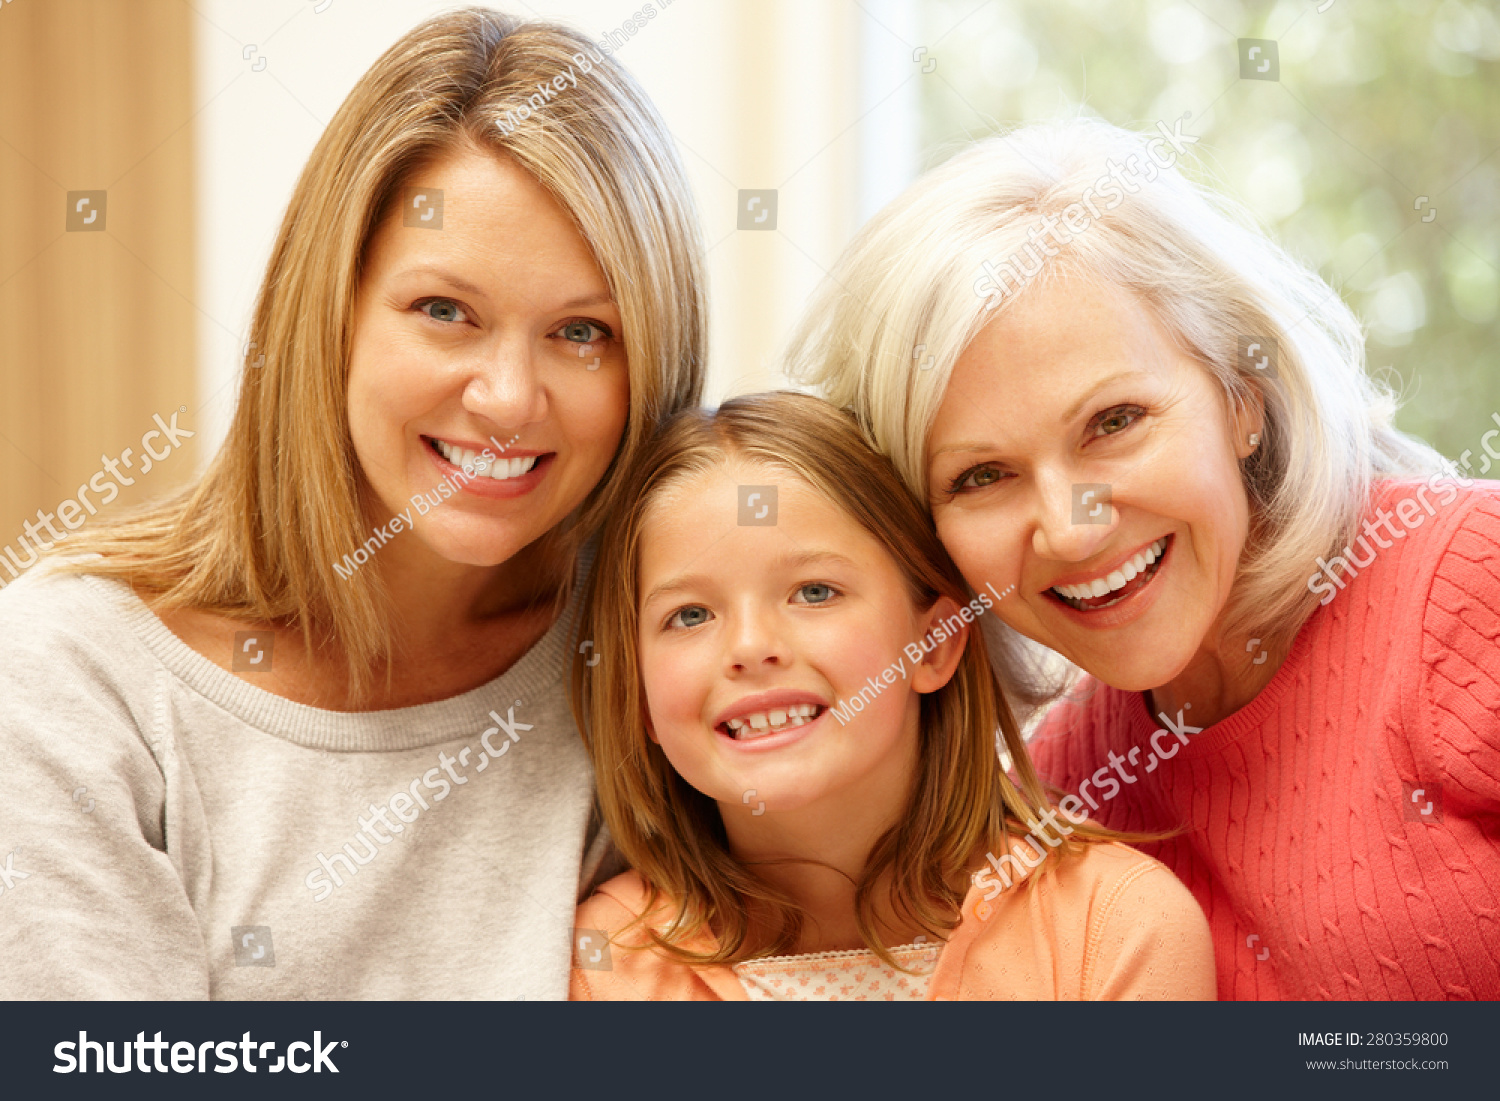 Multi-generation family portrait #280359800